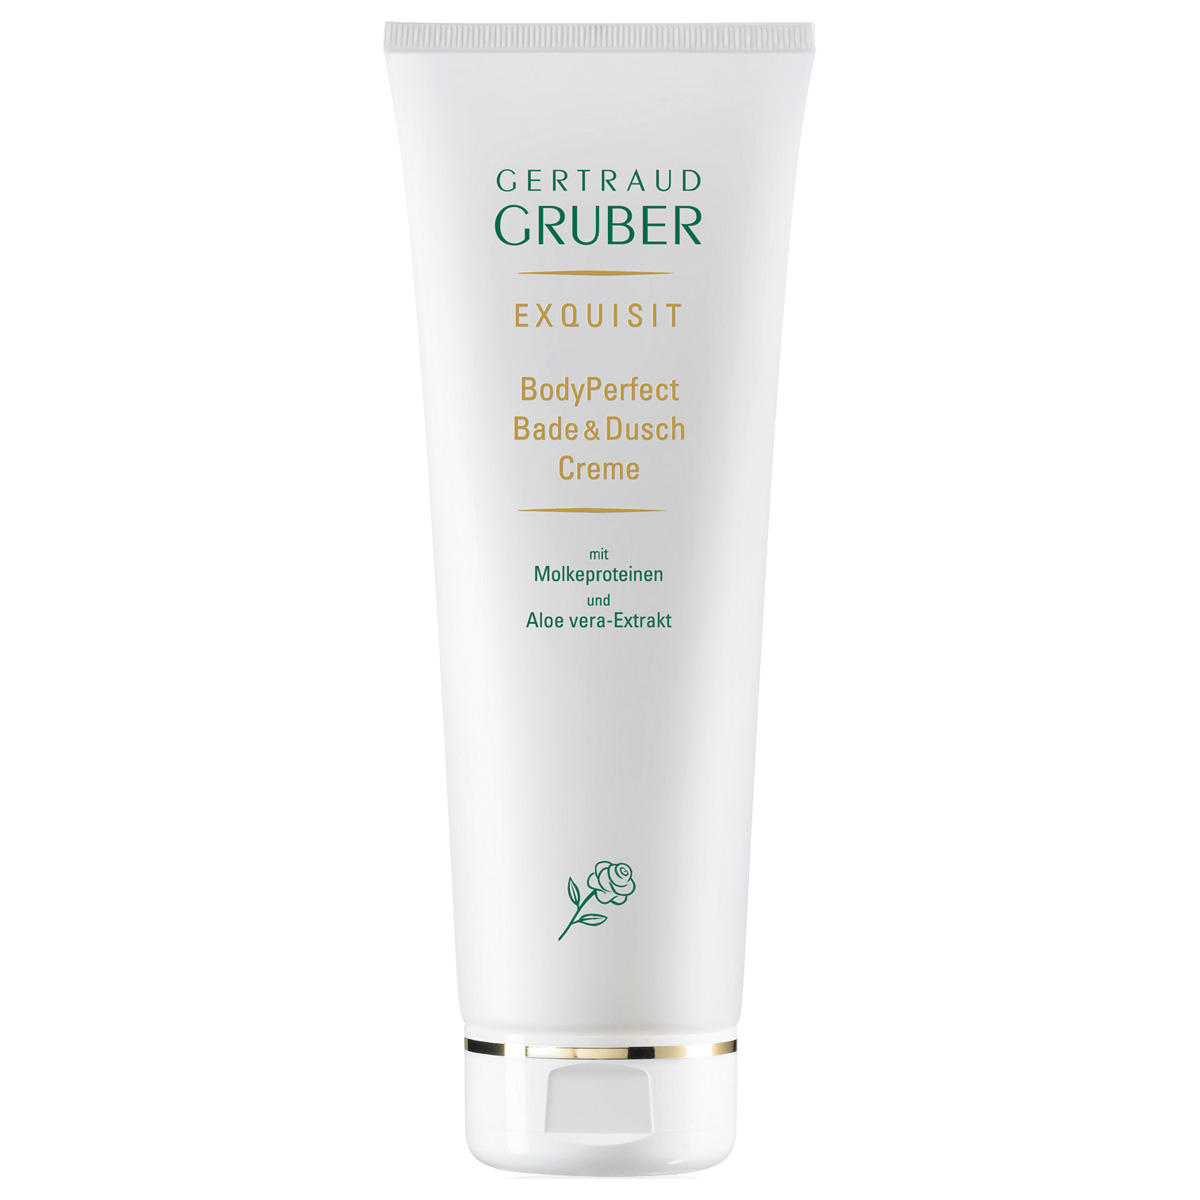 GERTRAUD GRUBER EXQUISIT Body Perfect bath & shower cream 250 ml - 1